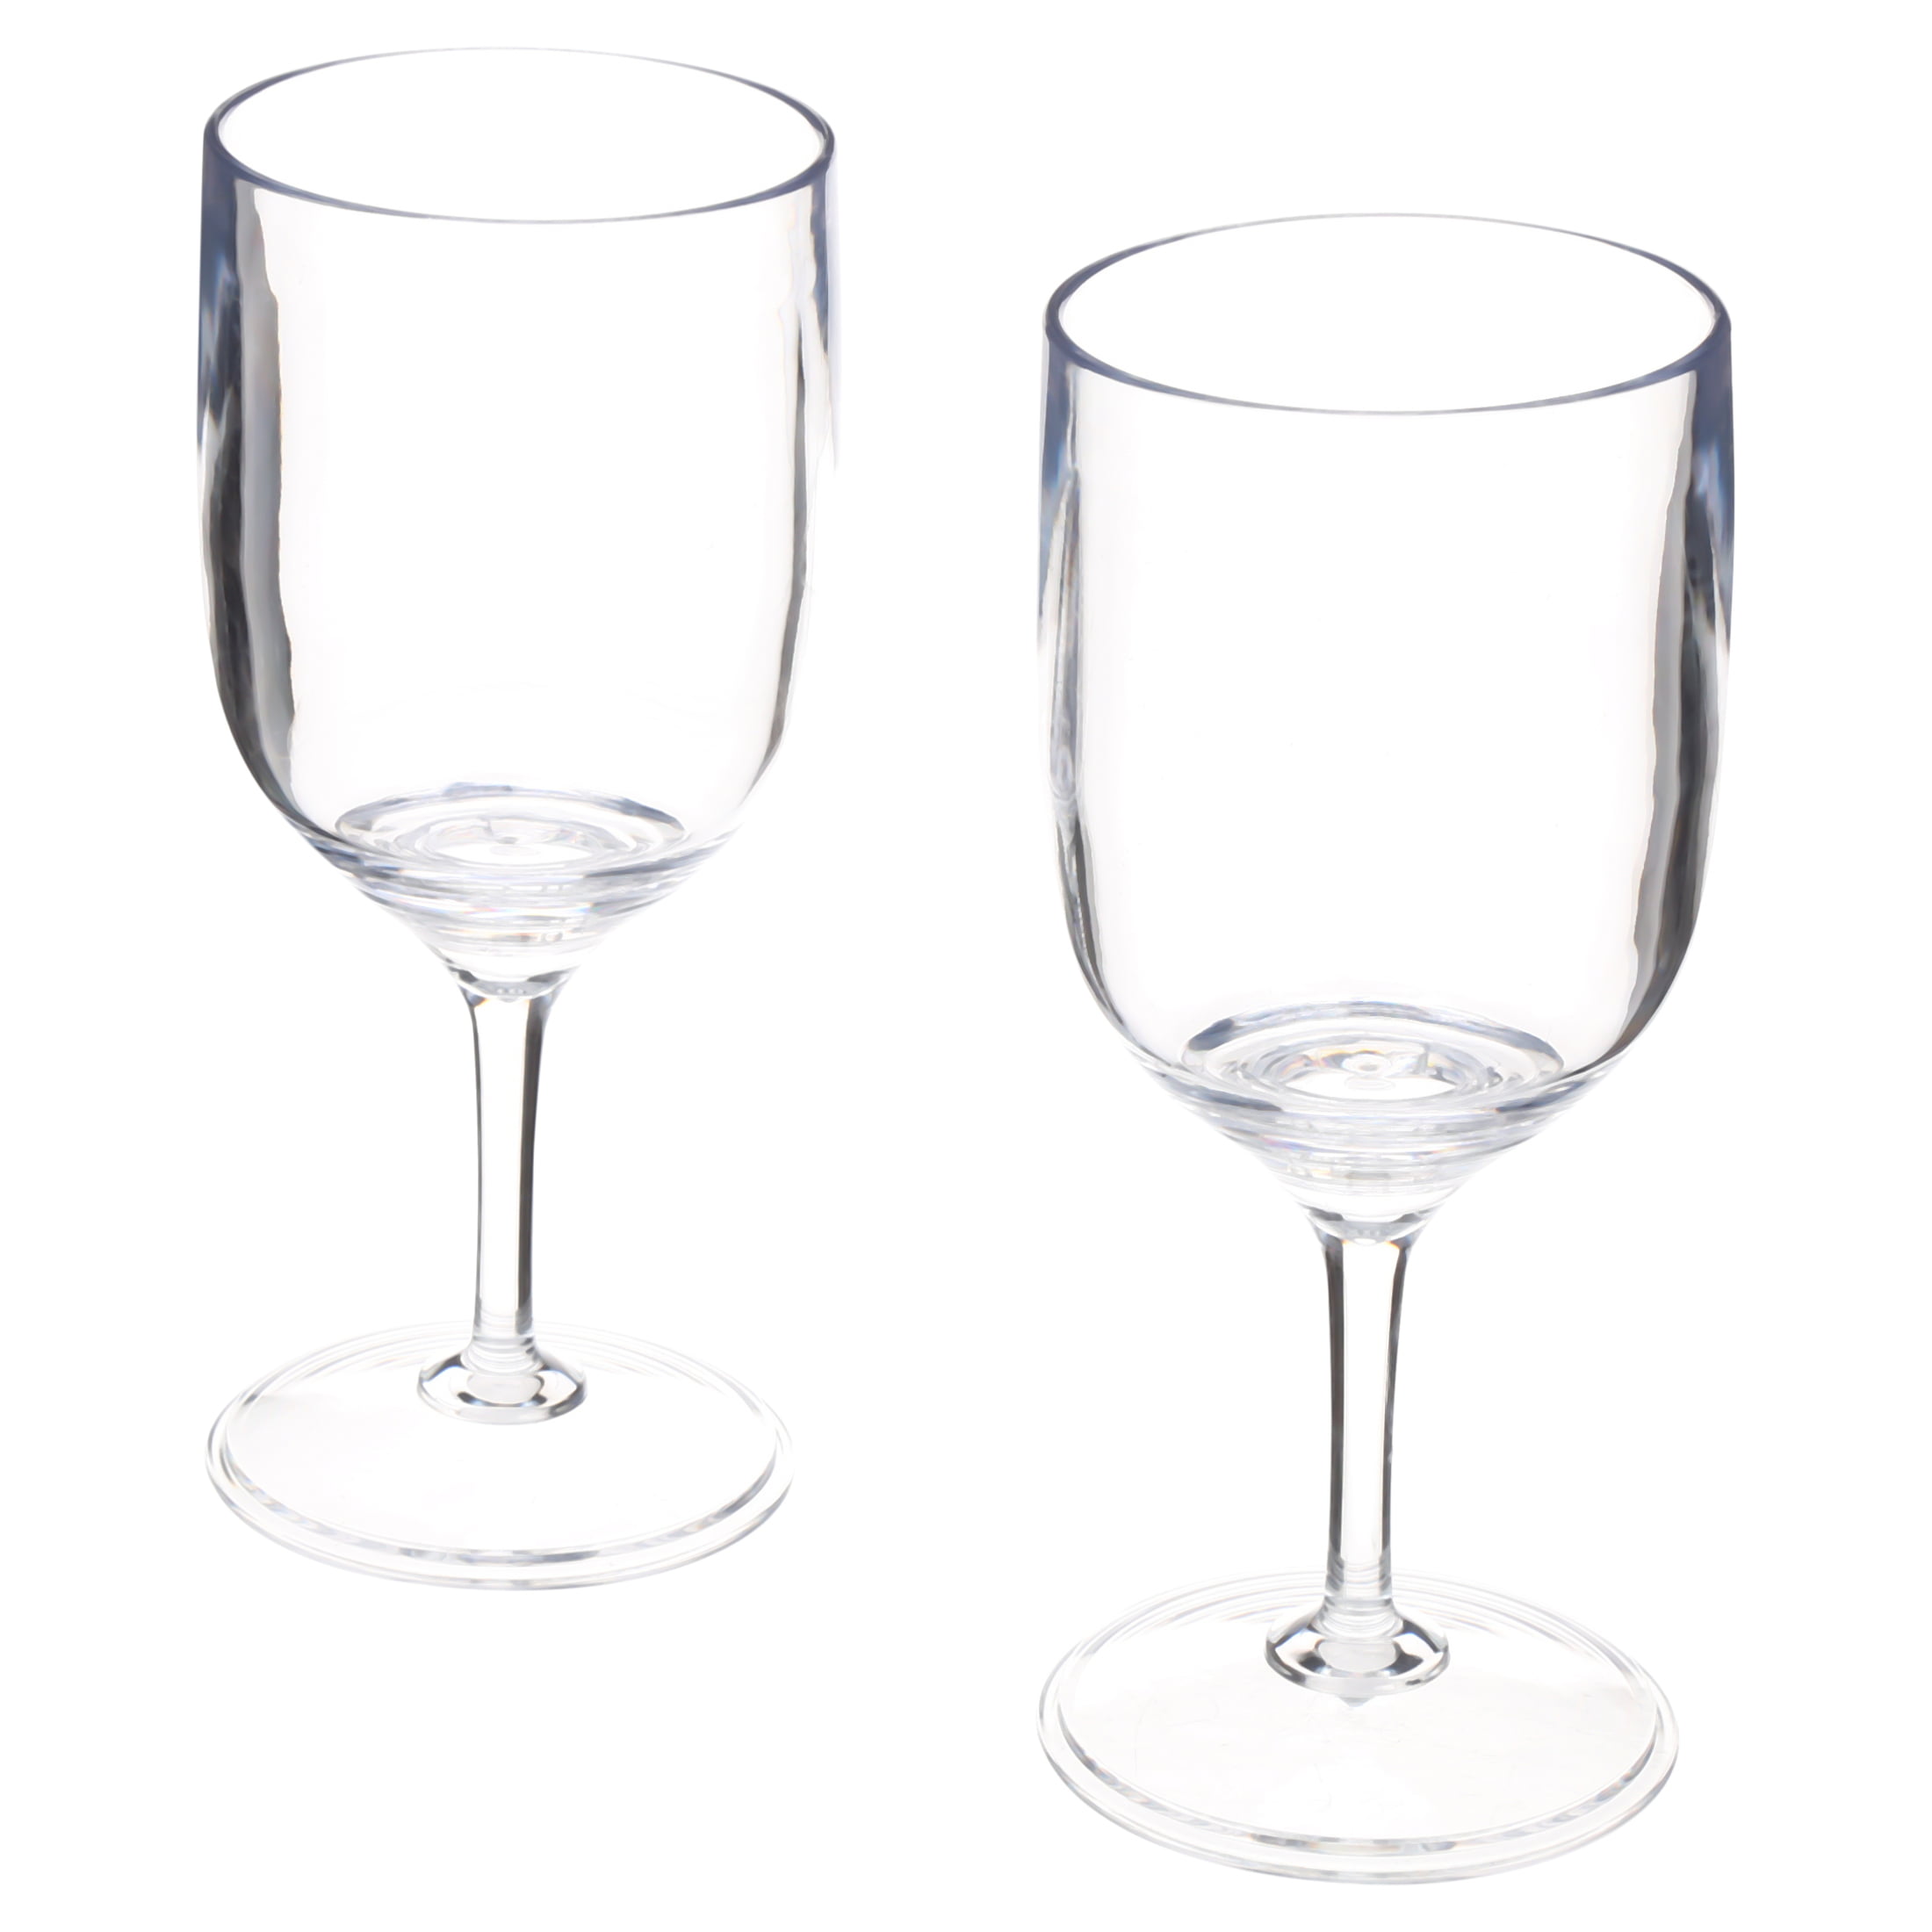 Wine Glasses With Lines at 5 Oz/6 Oz/8 Oz Unique Wood Stem Wine Glasses  Wine Glass Set of 4 Premium Stemware Wine Glass Rw006 